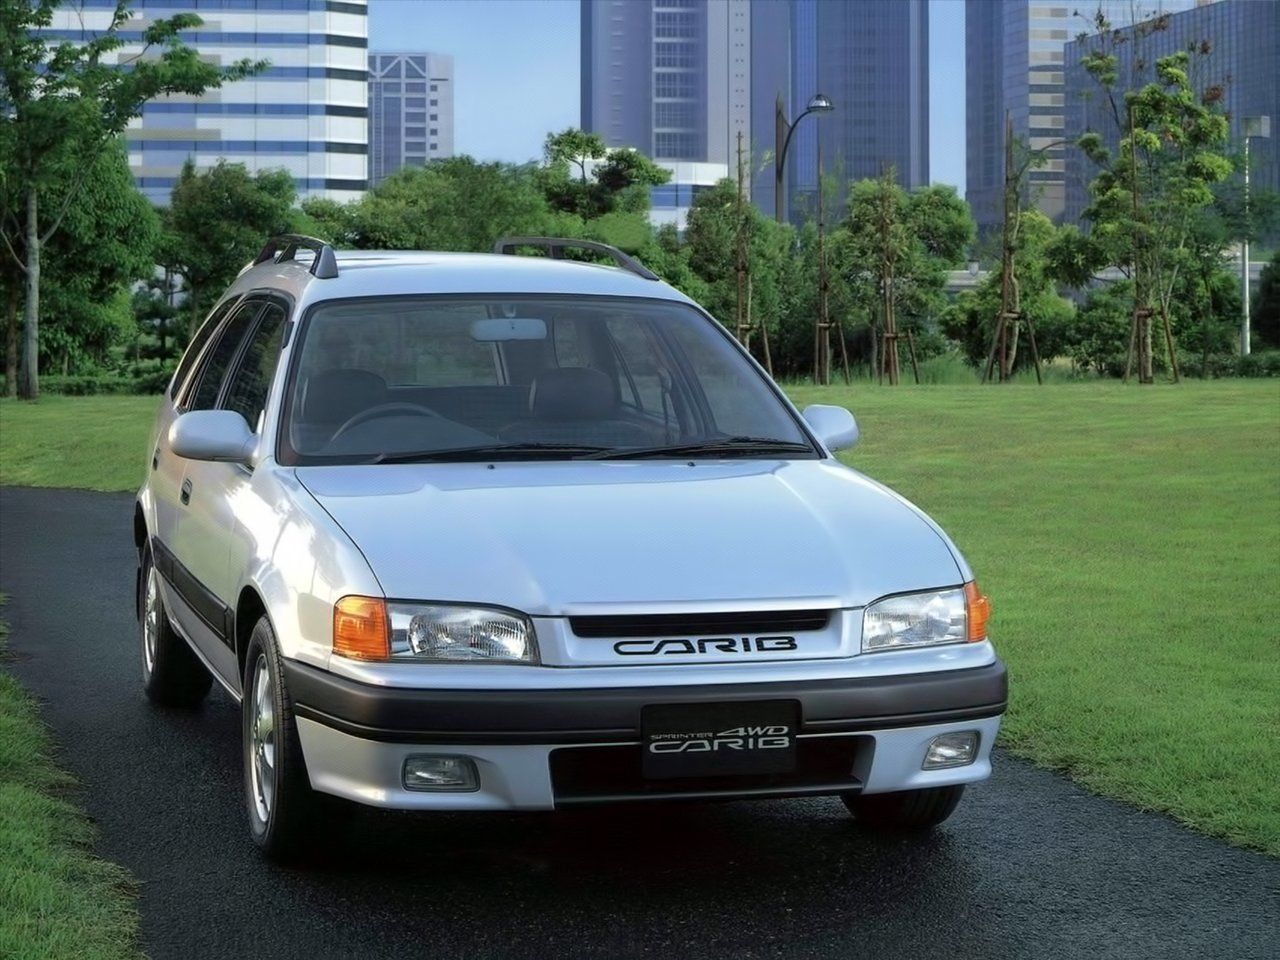 Спринтер универсал. Toyota Sprinter Carib 1995. Тойота Кариб 1995. Toyota Sprinter Carib 3. Тойота Спринтер Кариб 1995.